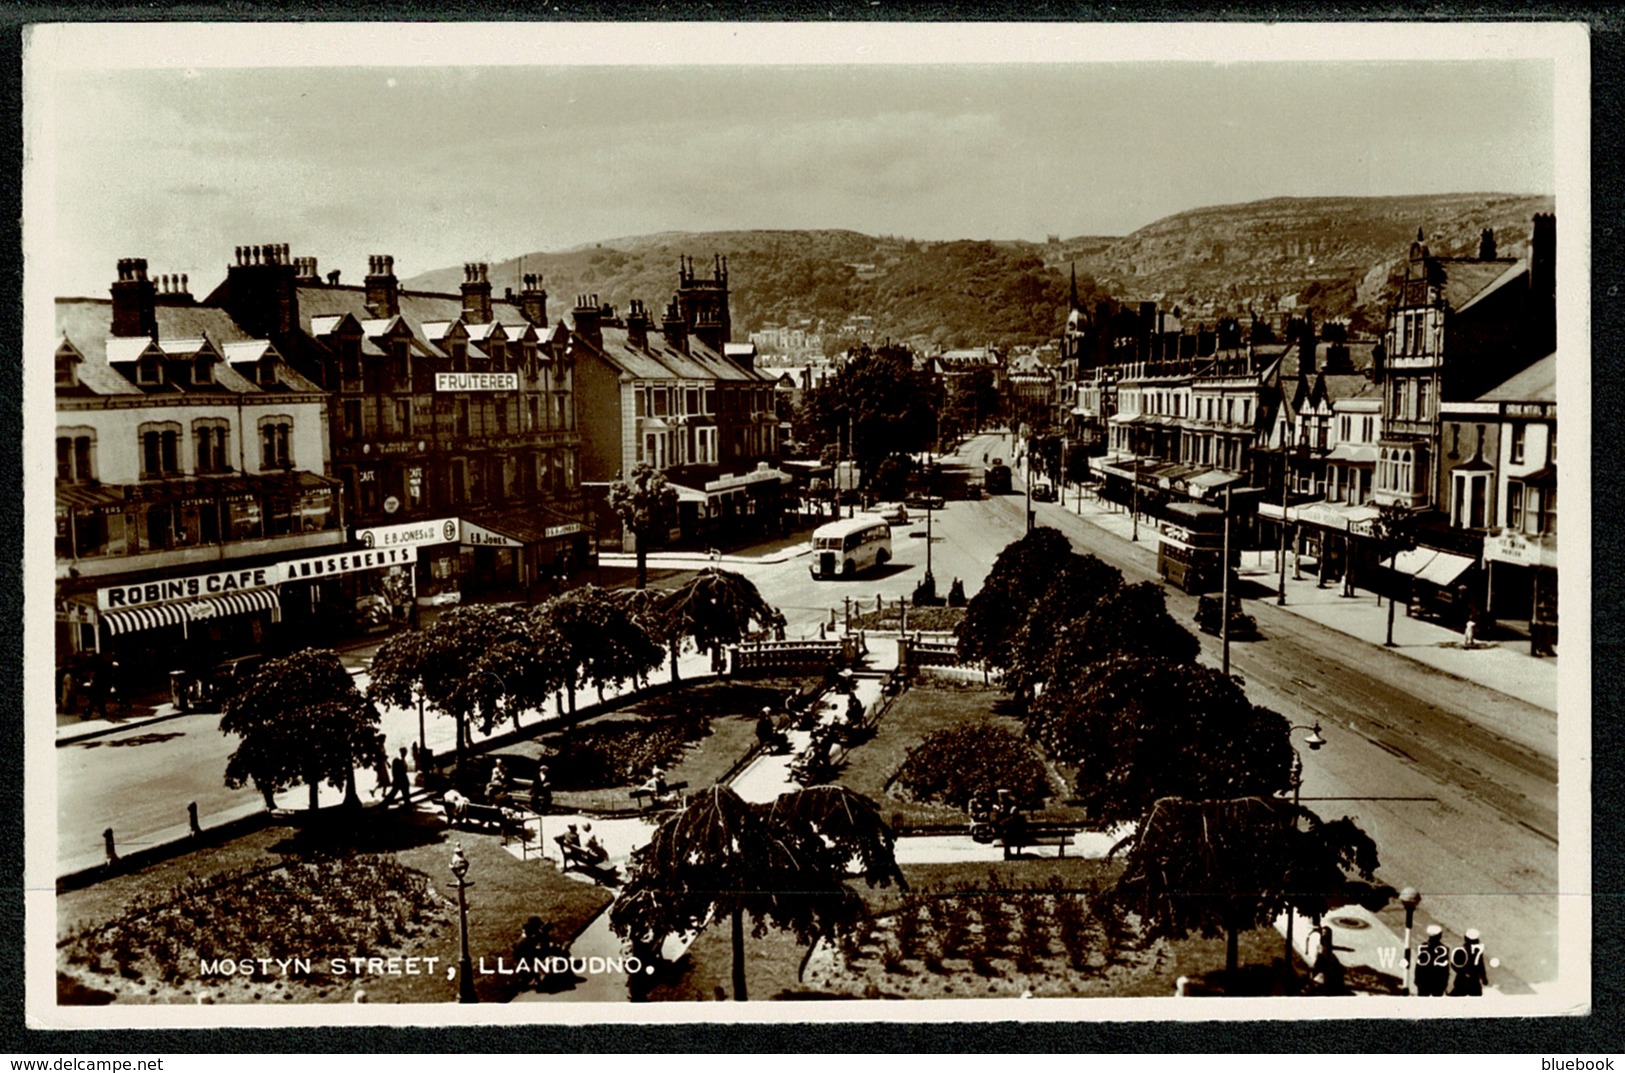 Ref 1293 - 1959 Real Photo Postcard - Robin's Cafe Mostyn Street - Llandudno Wales - Caernarvonshire